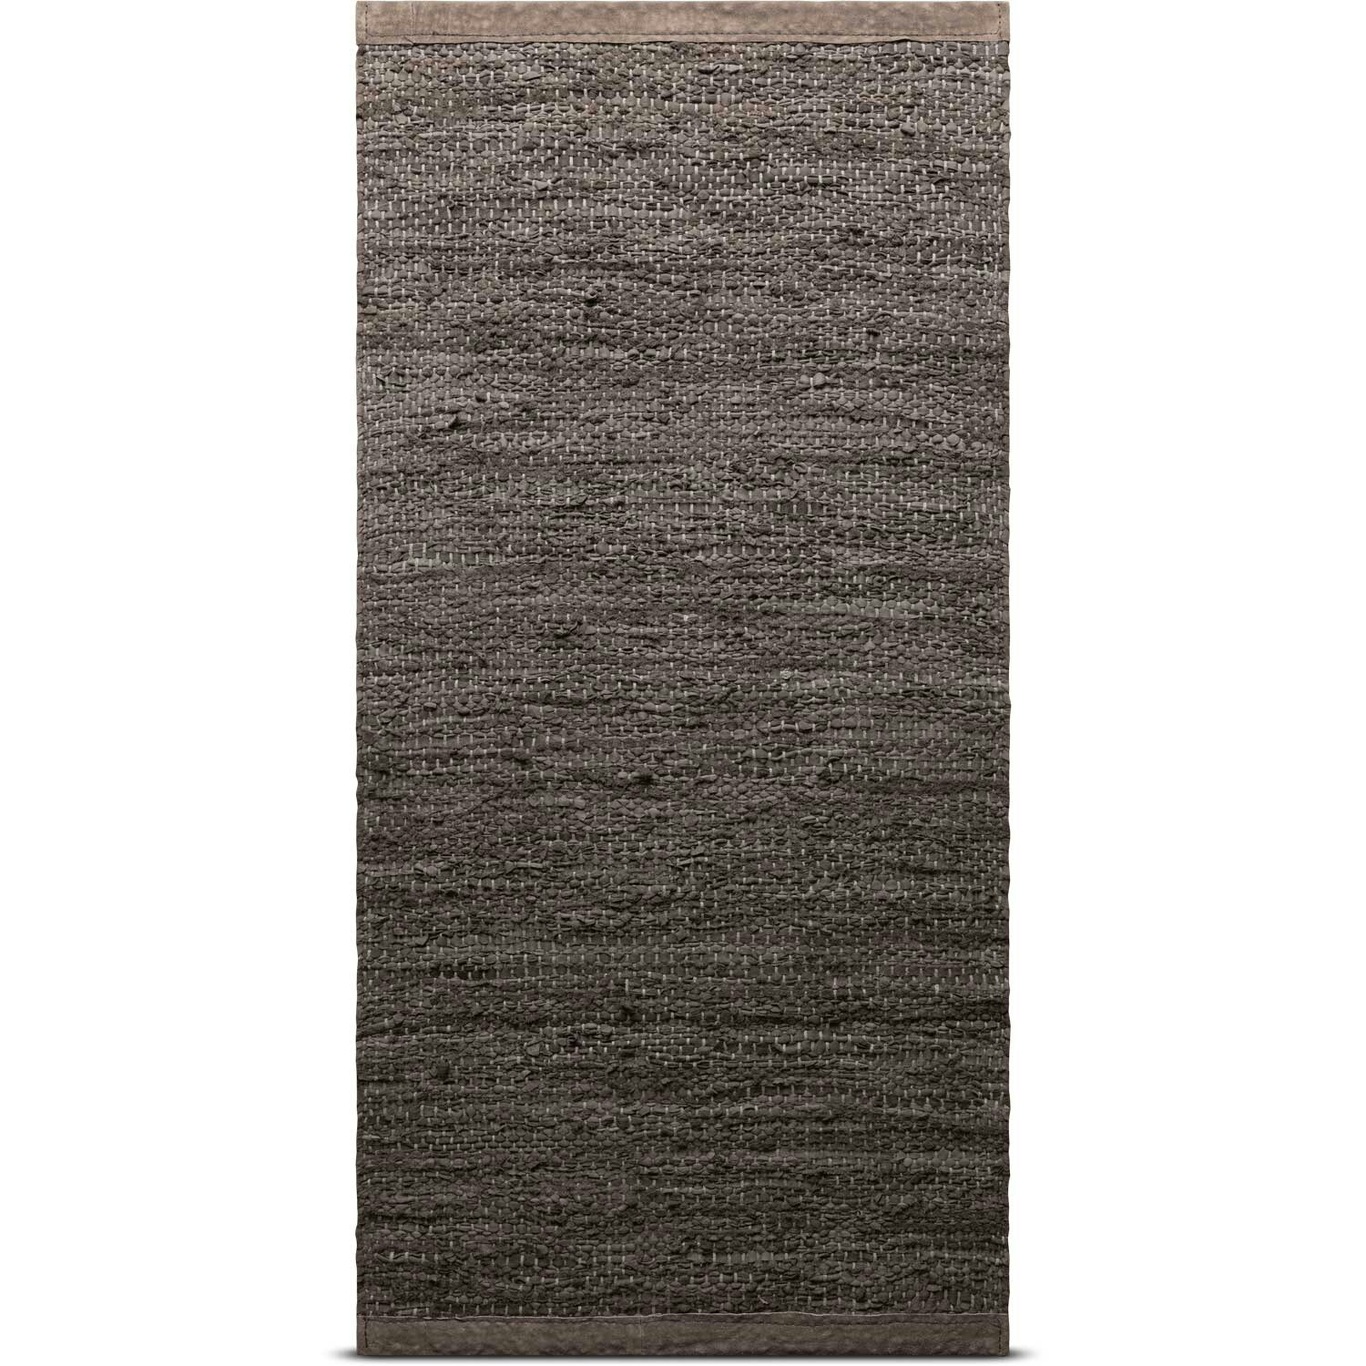 Leather rug 170x240cm, Wood